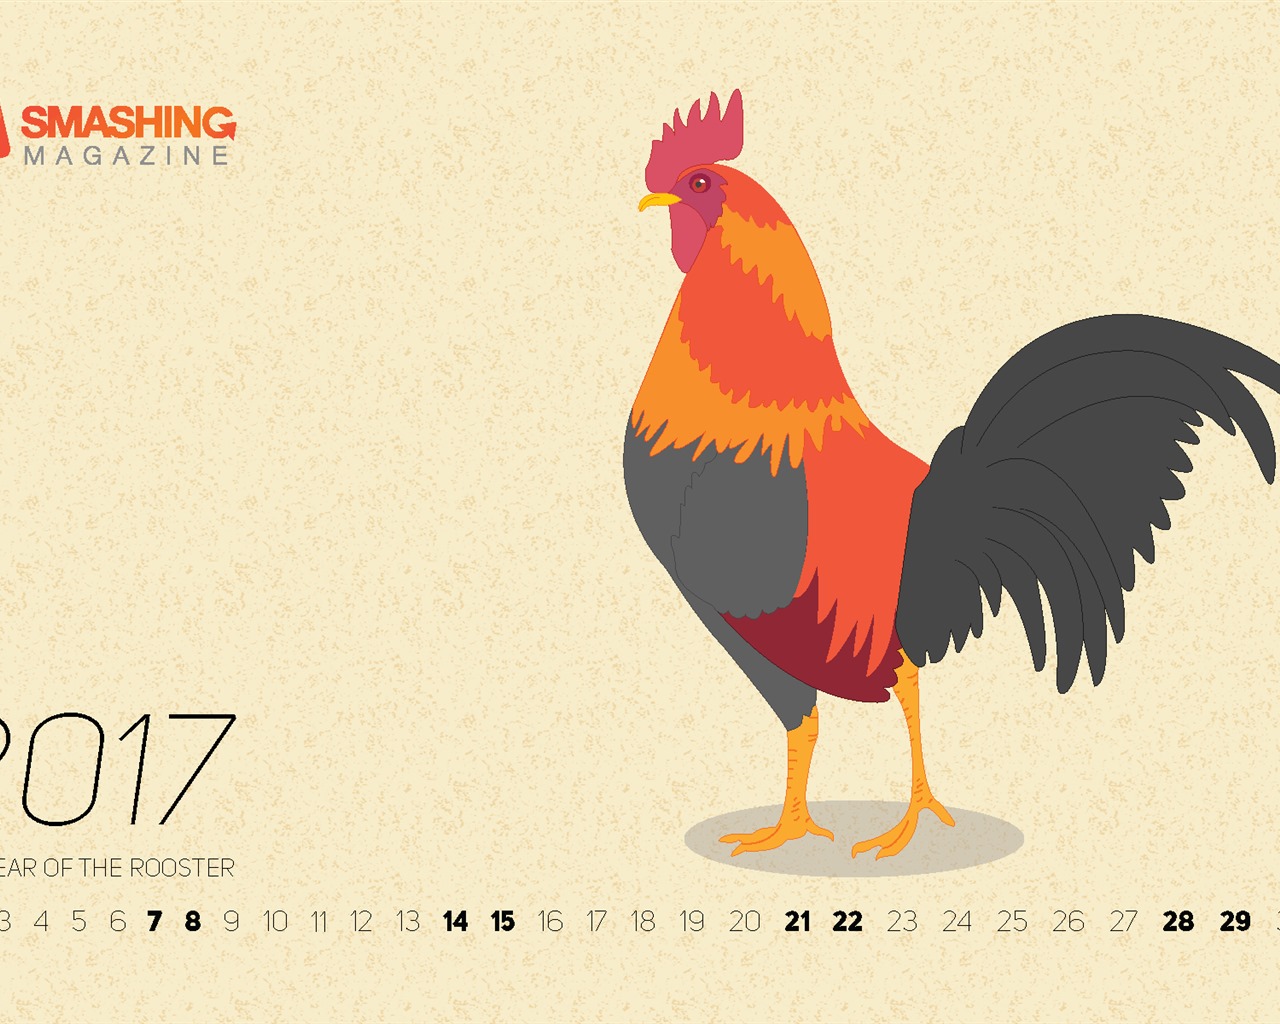 Fondos de calendario de enero de 2017 (1) #1 - 1280x1024